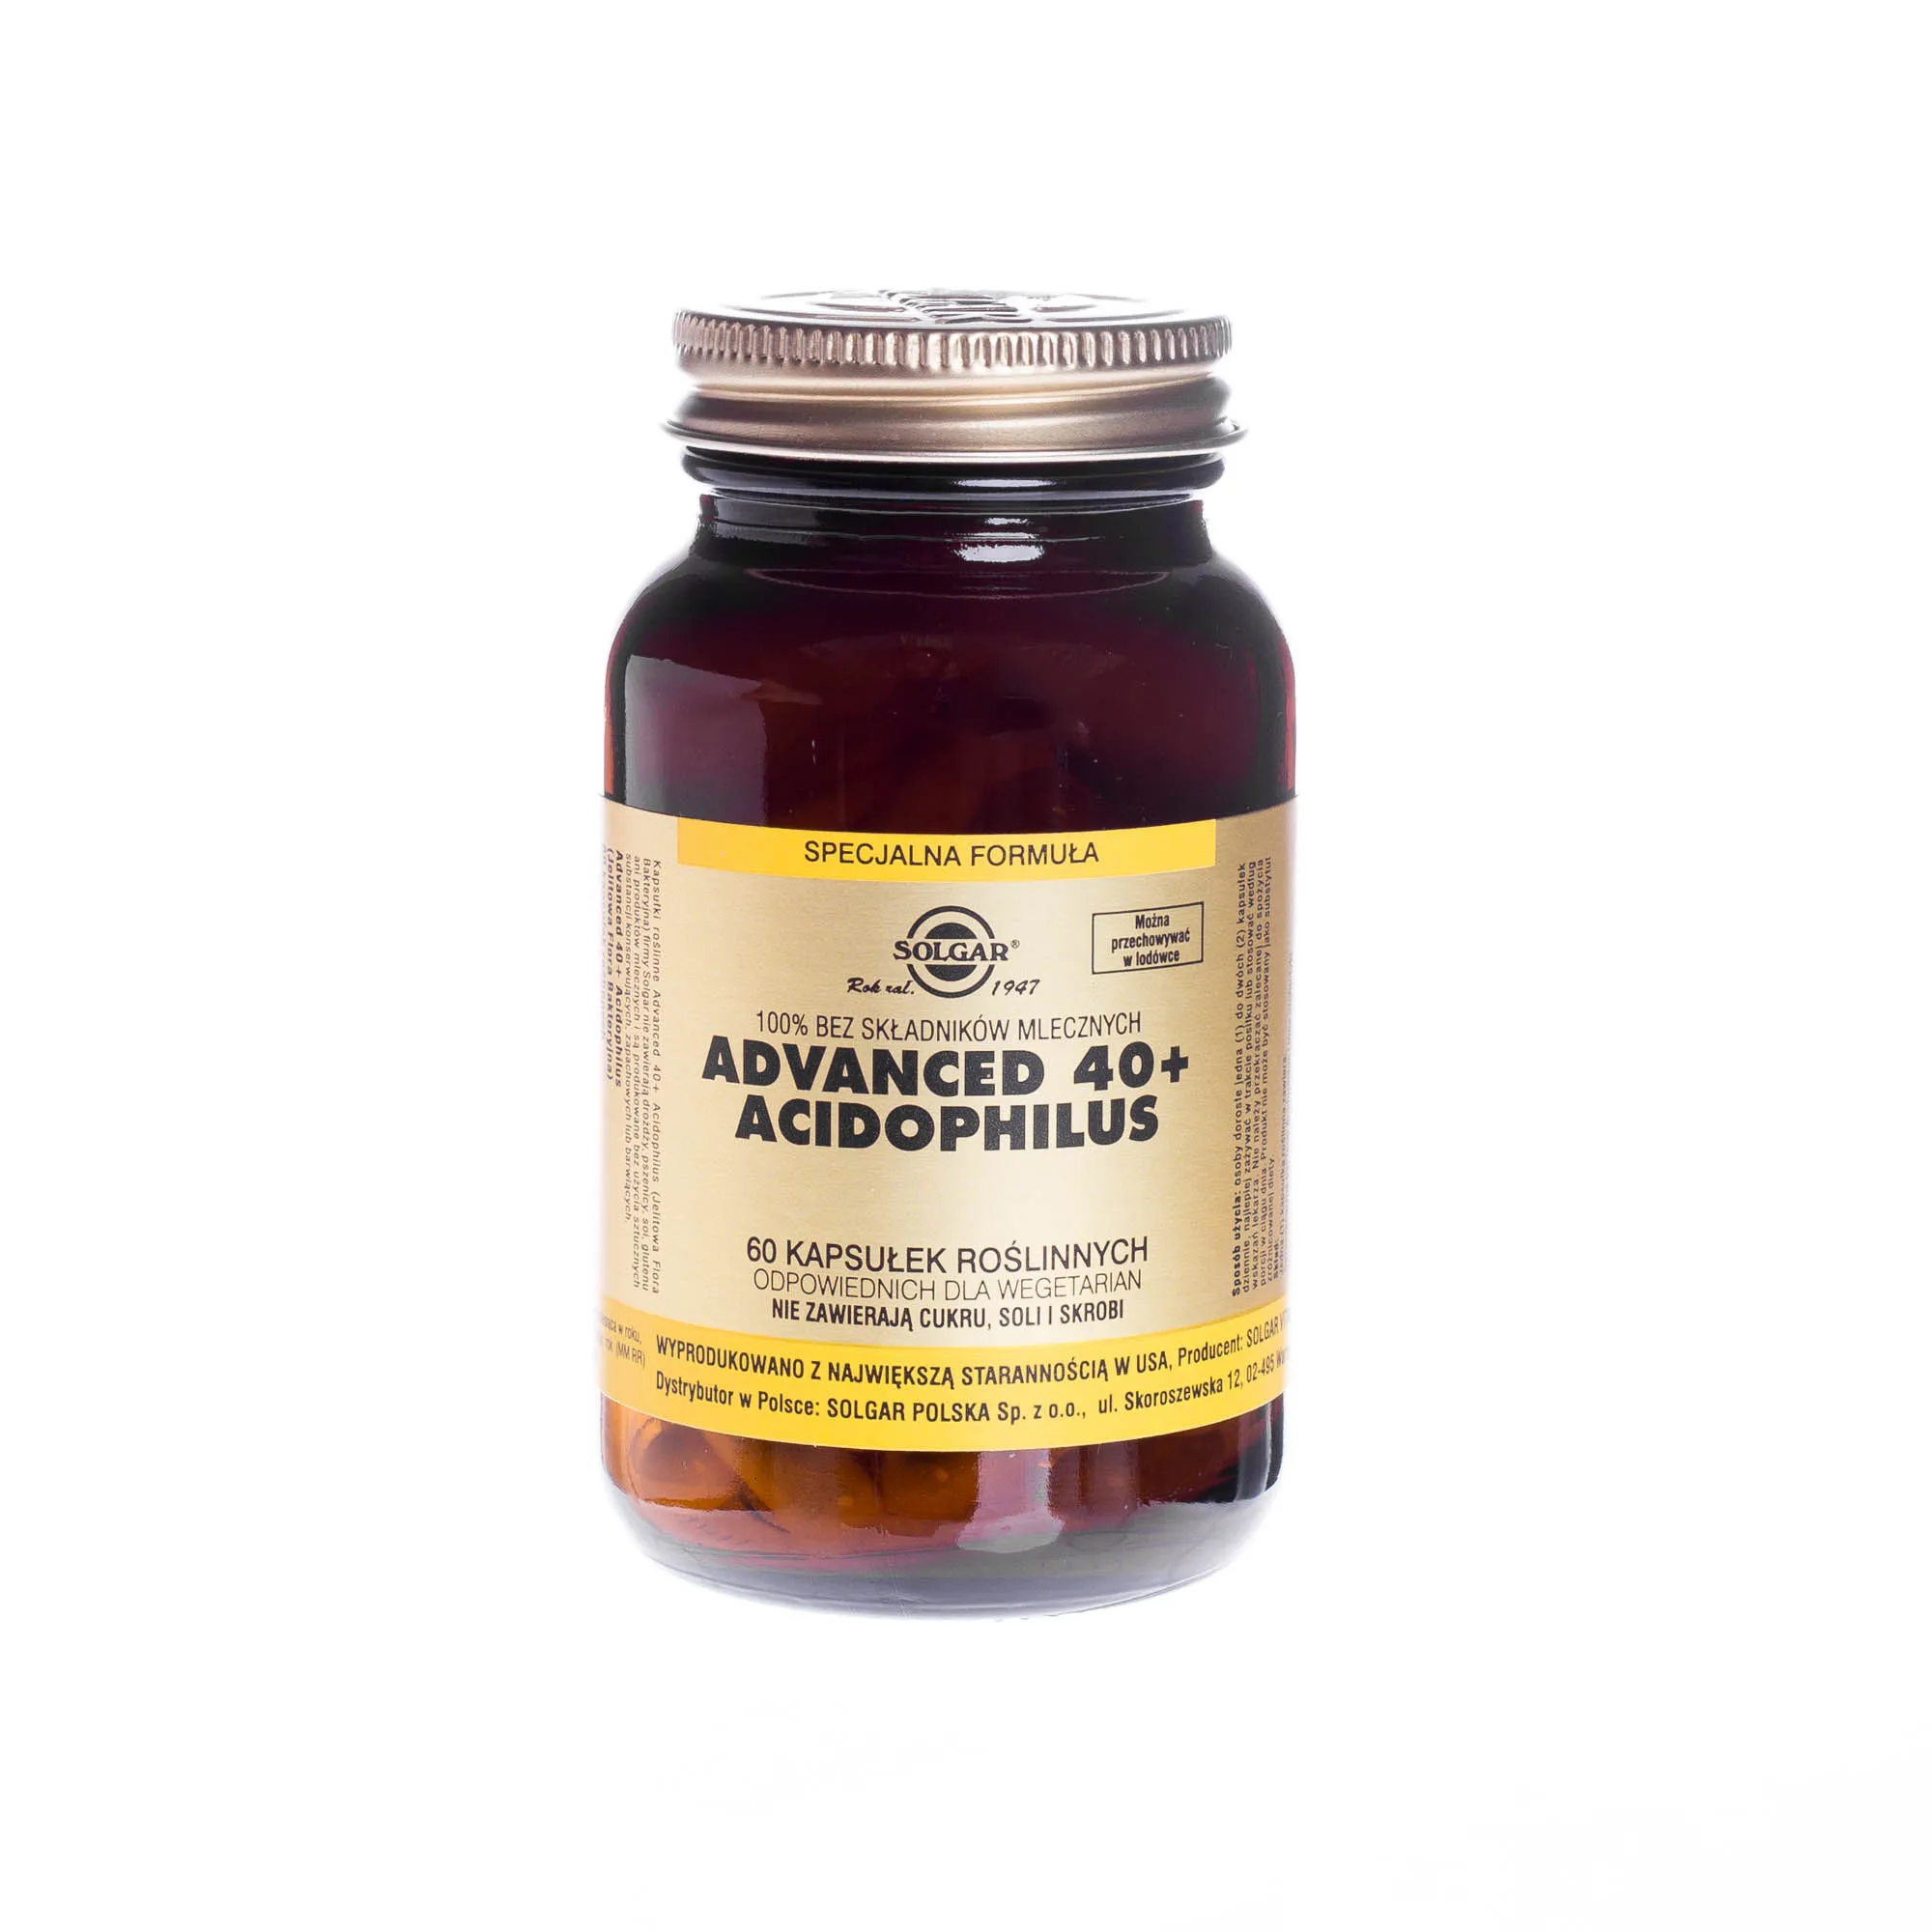 Solgar Advanced 40+, Acidophilus, suplement diety, 60 kapsułek roślinnych